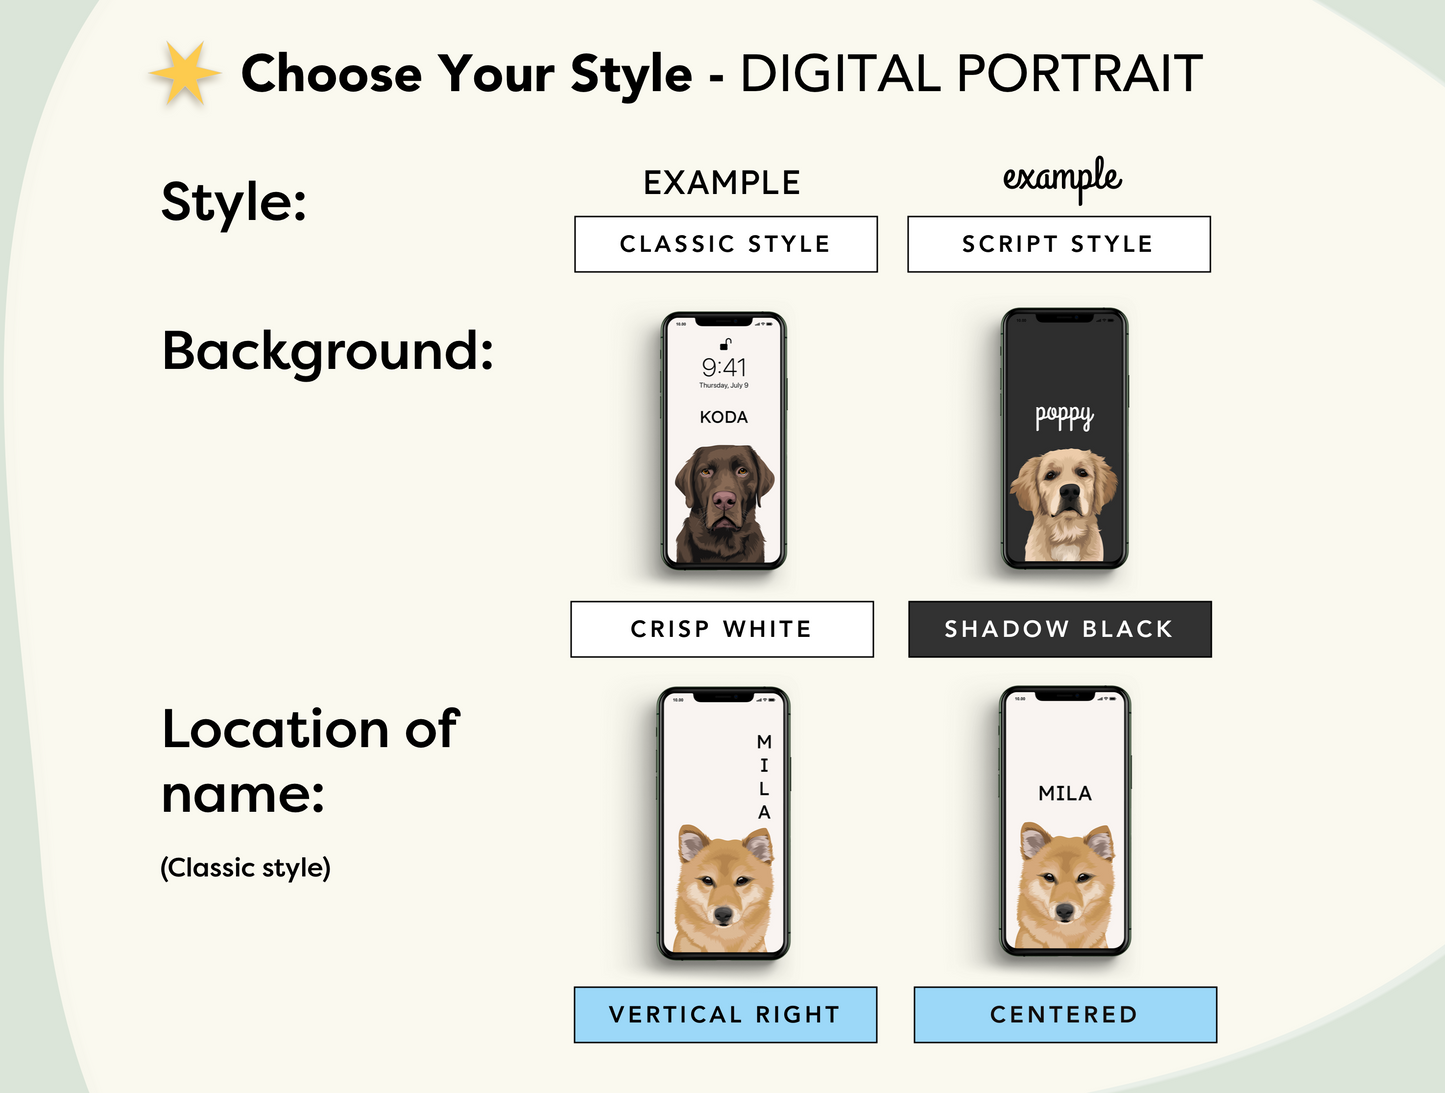 Custom Digital Pet Portrait